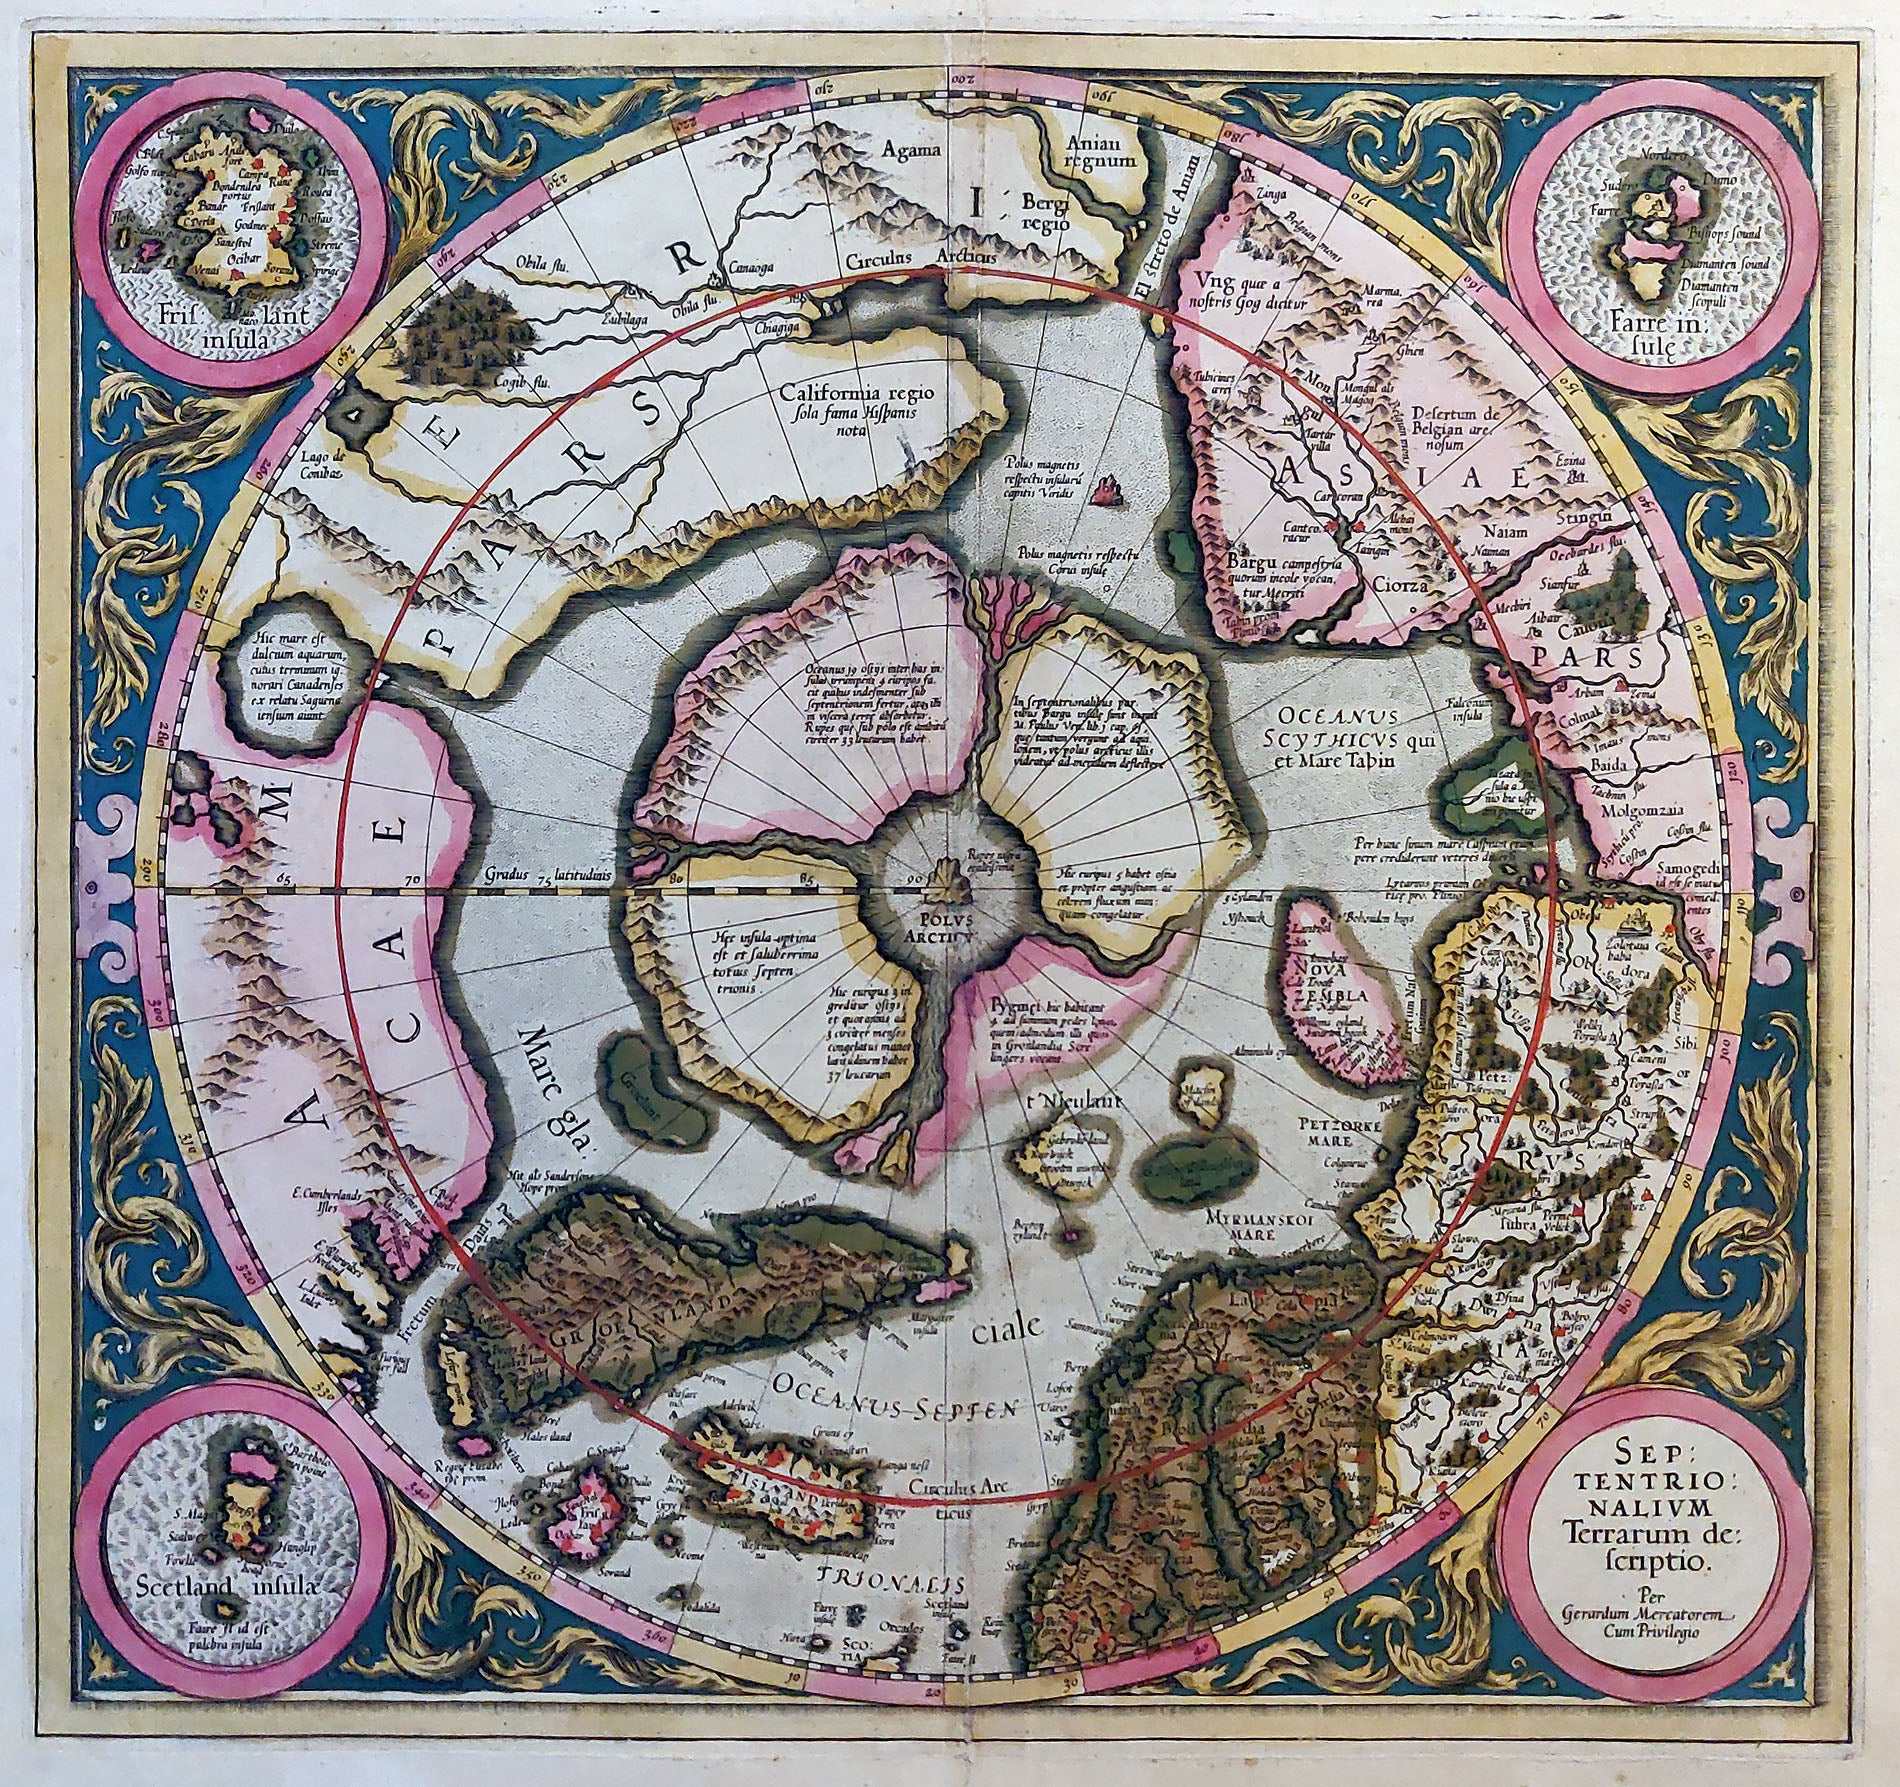 Septentrionalium Terrarum descriptio, Mercator, c. 1633 north pole map friesland map Iceland maps